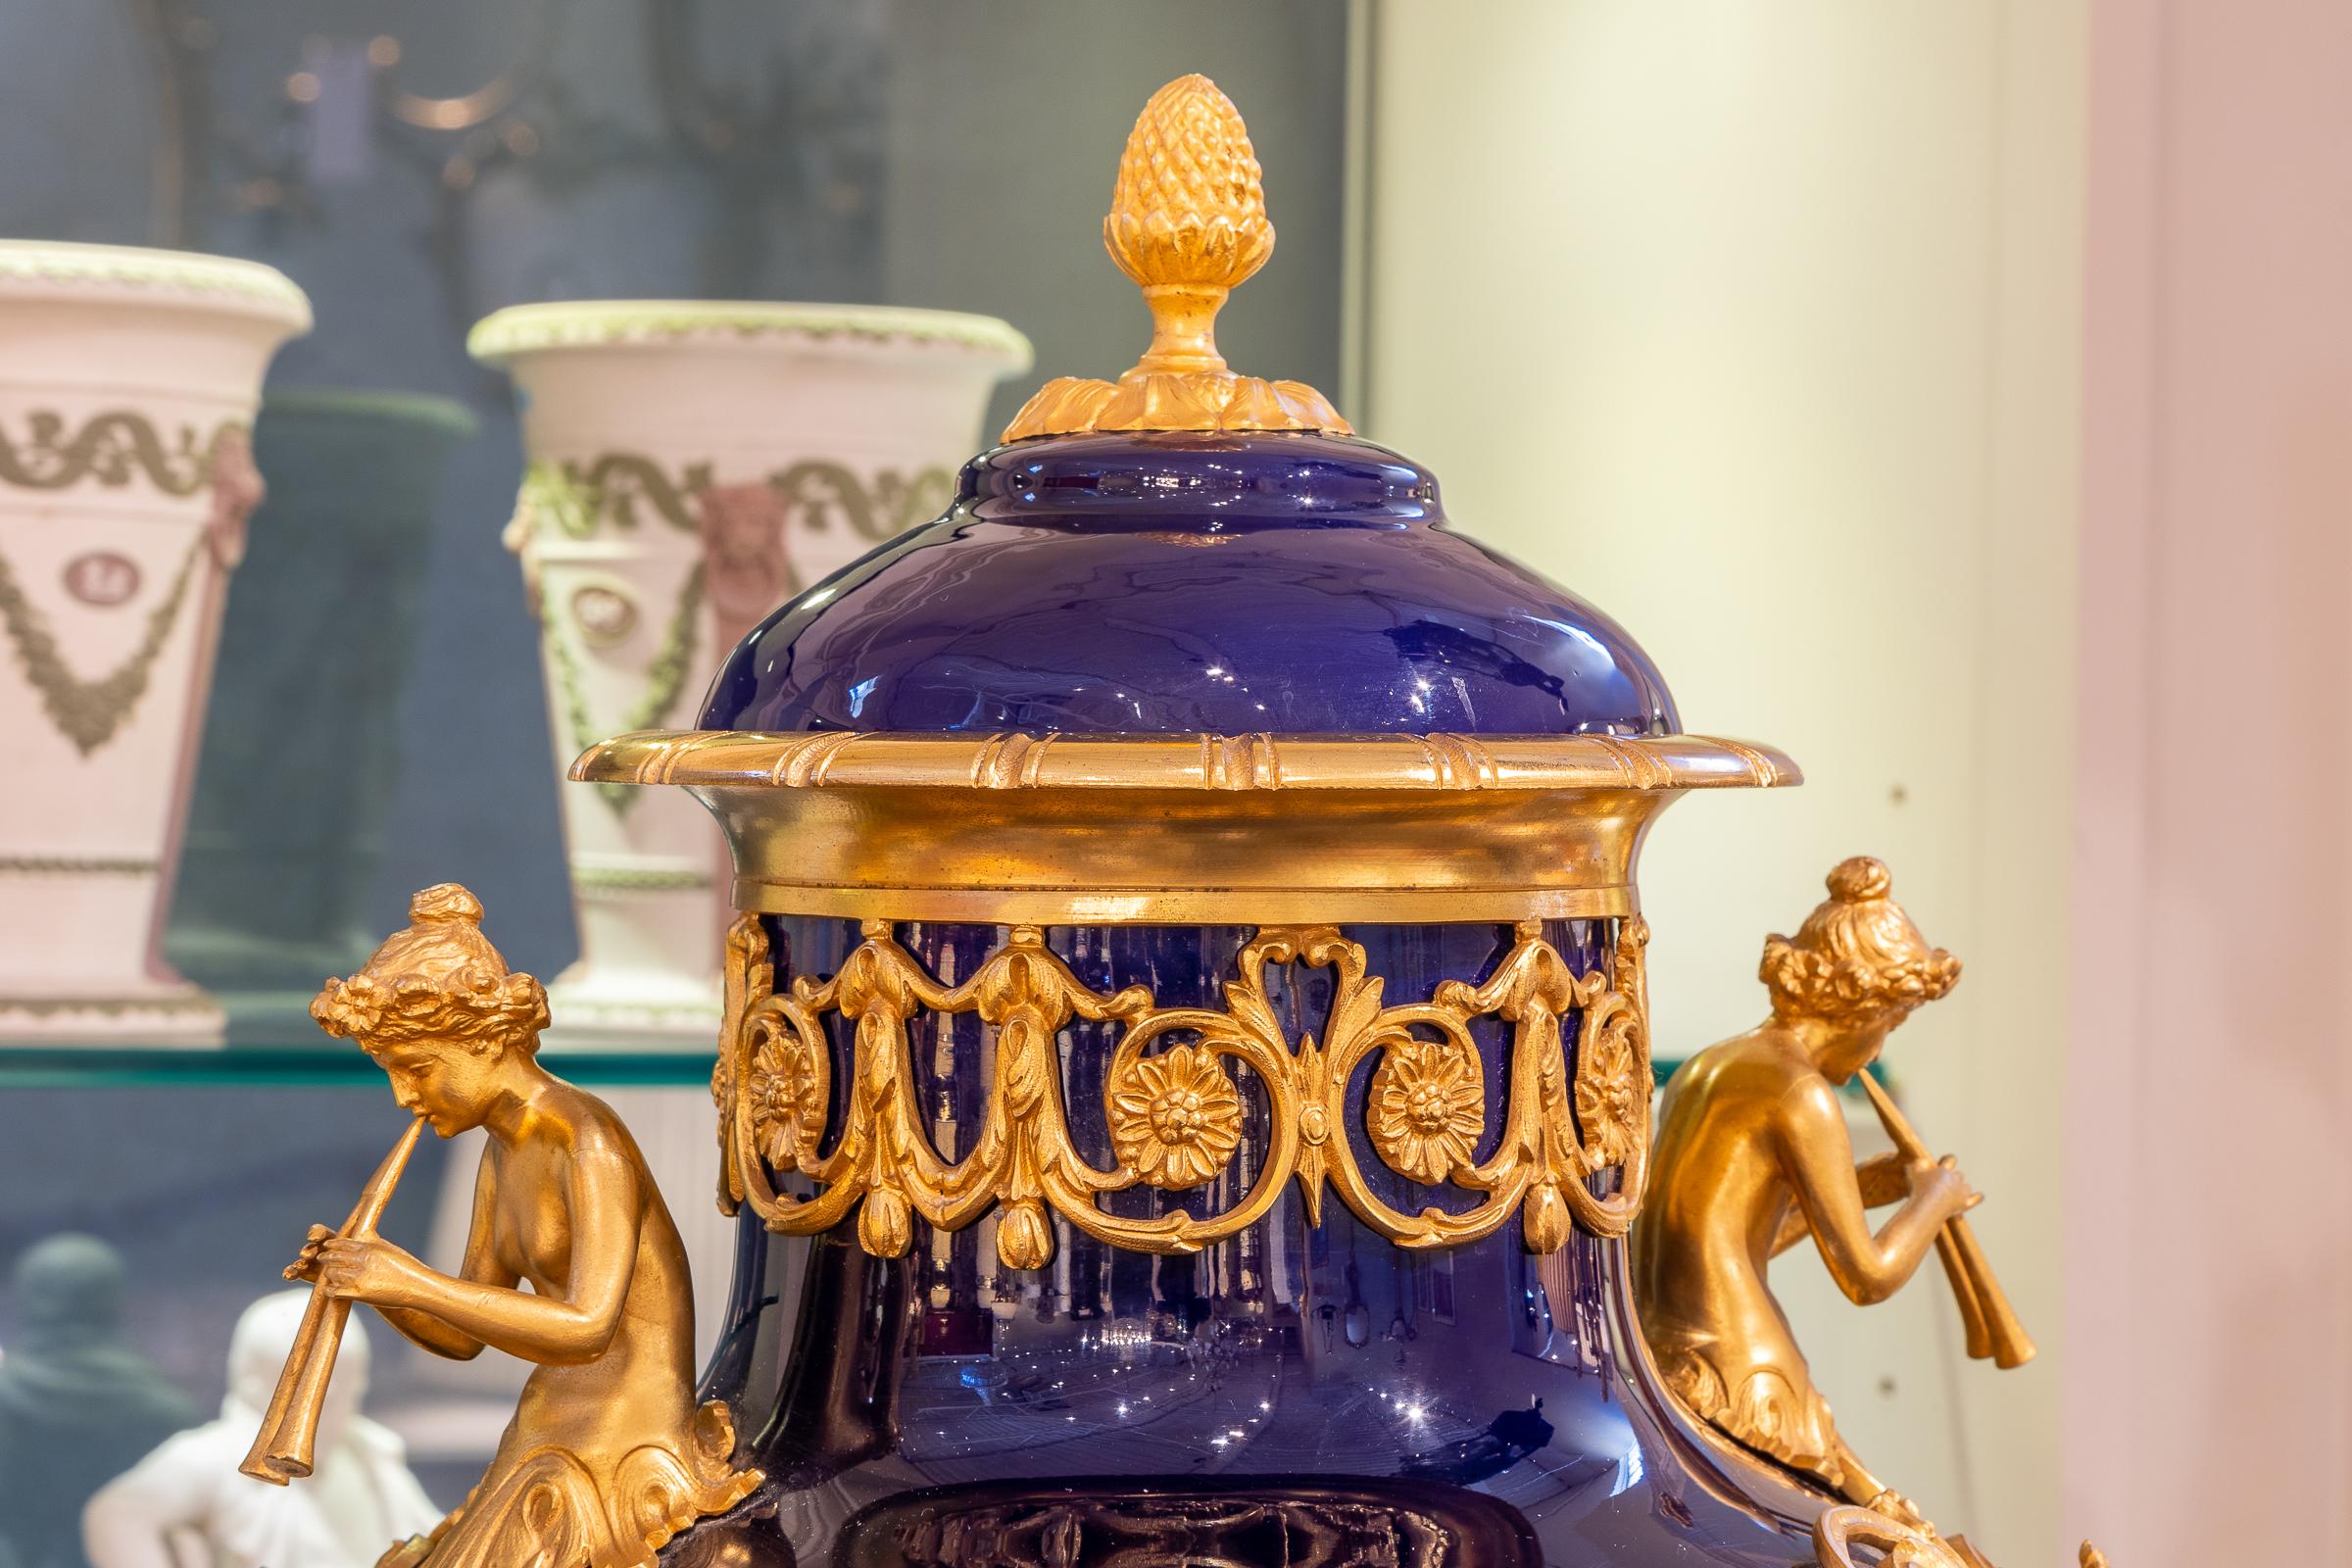 French Fine Large Lidded 19th Century Sevre's Porcelain and Gilt Bronze Mounted Vase